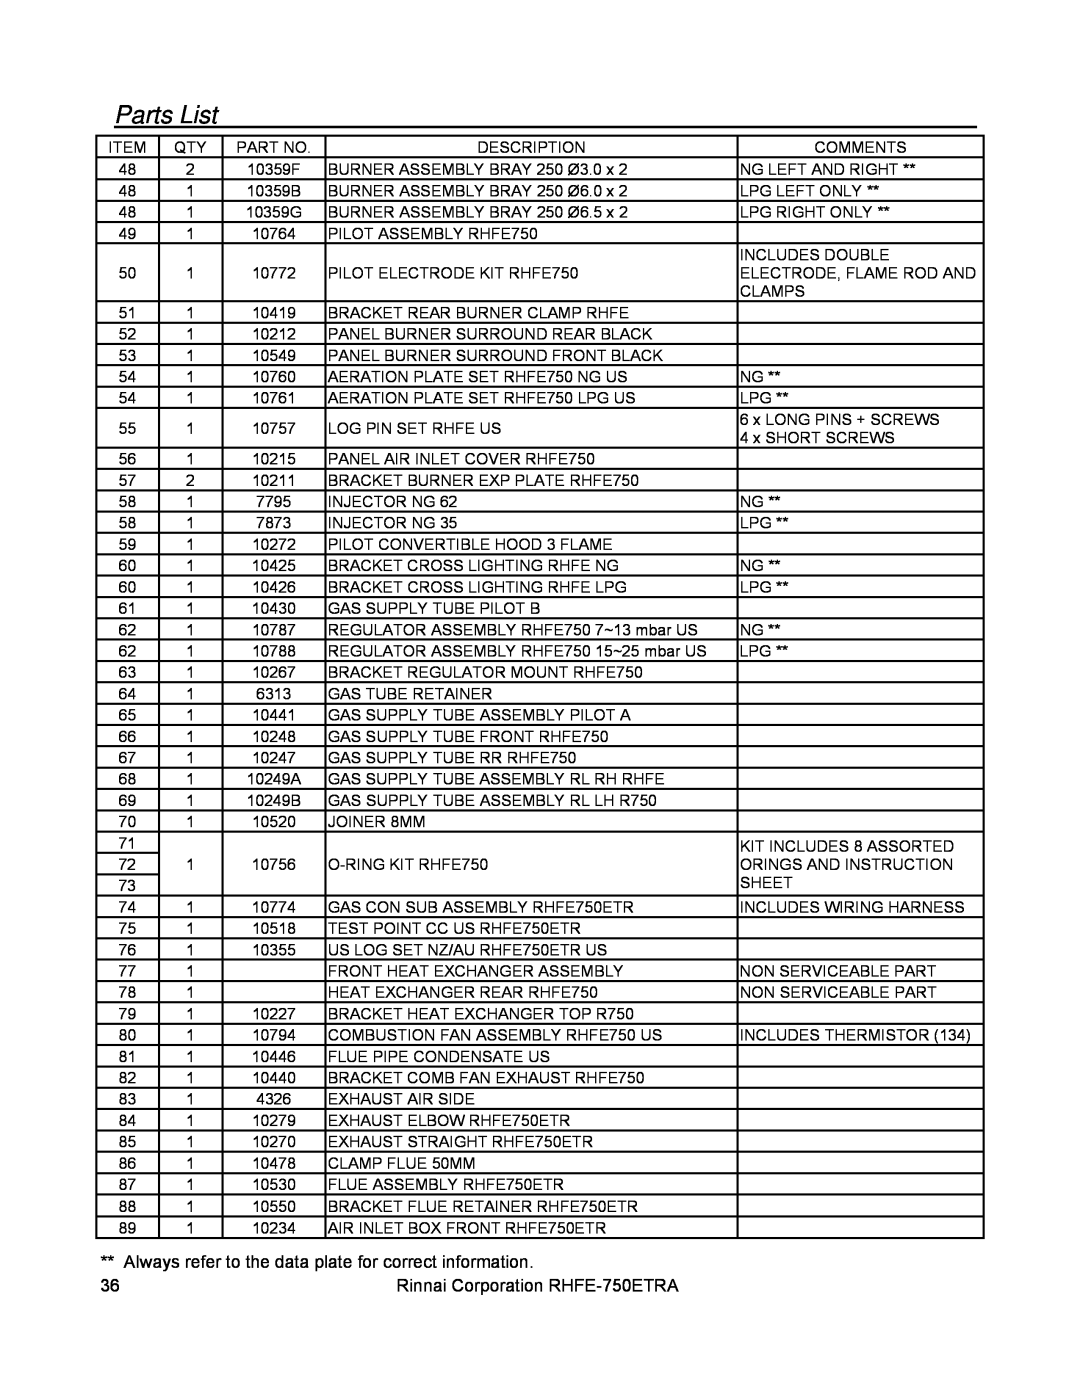 Rinnai installation manual Parts List, Rinnai Corporation RHFE-750ETRA 